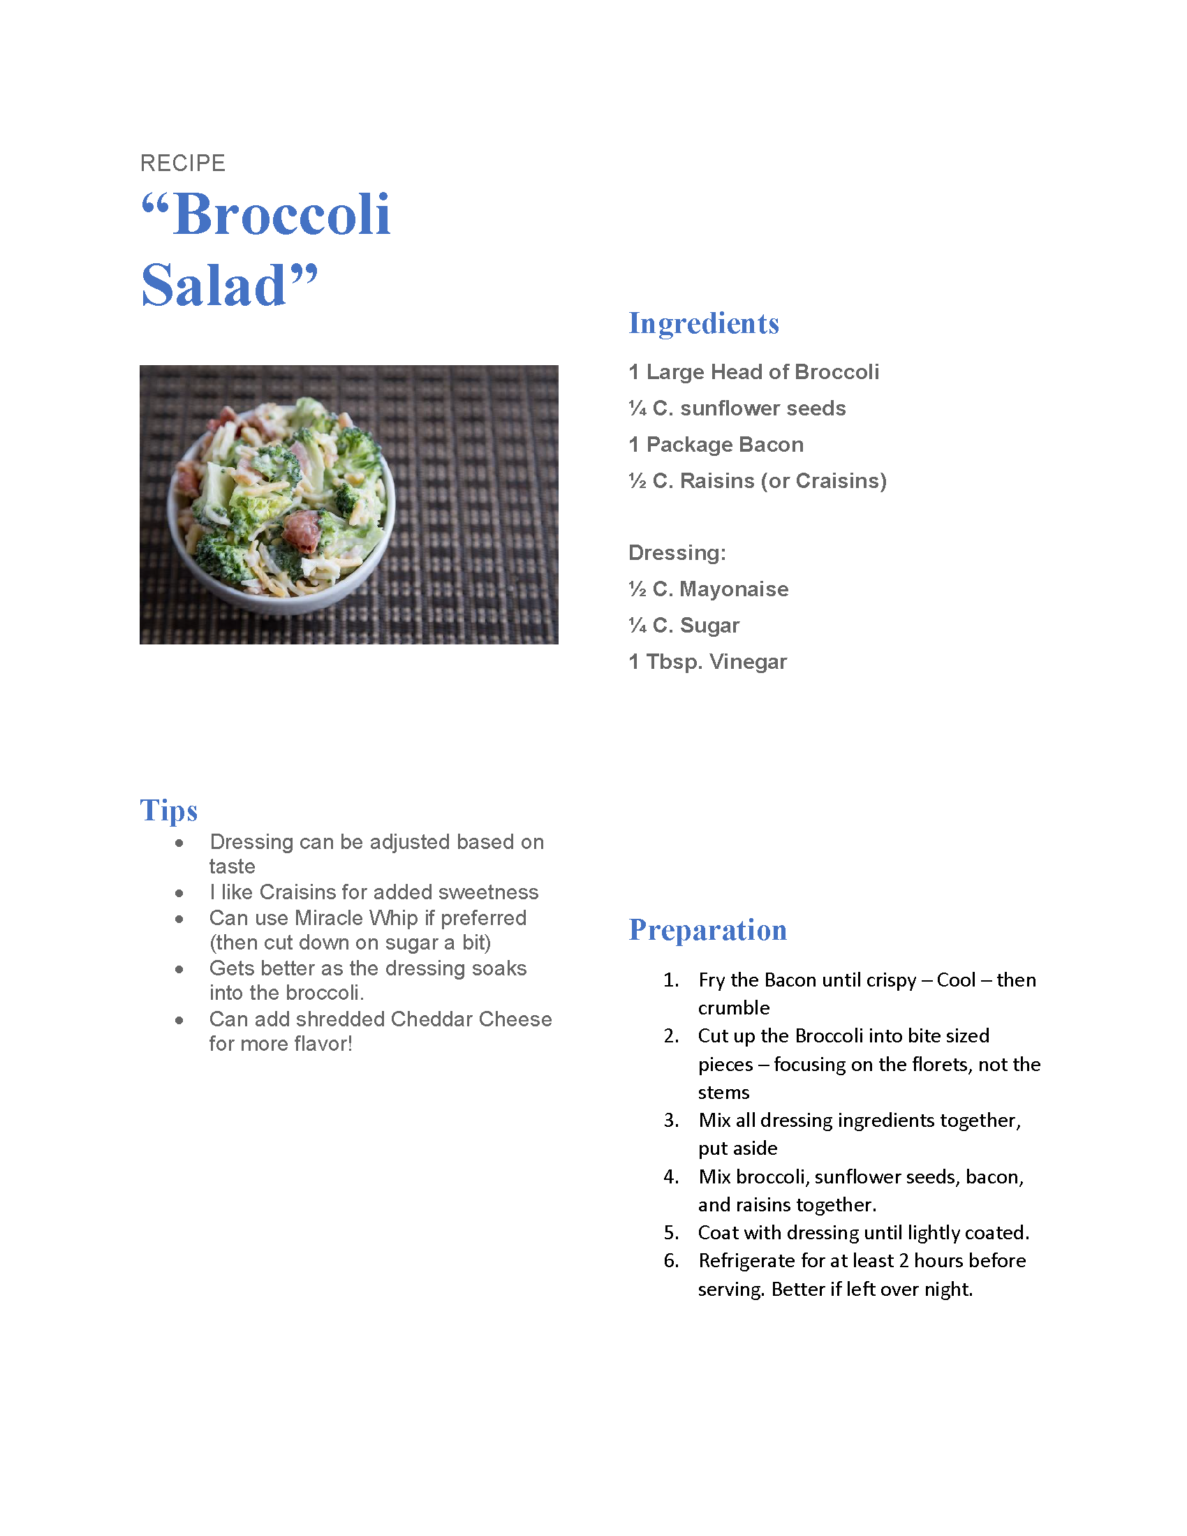 Tasty Broccoli Salad - Recipe For Freedom